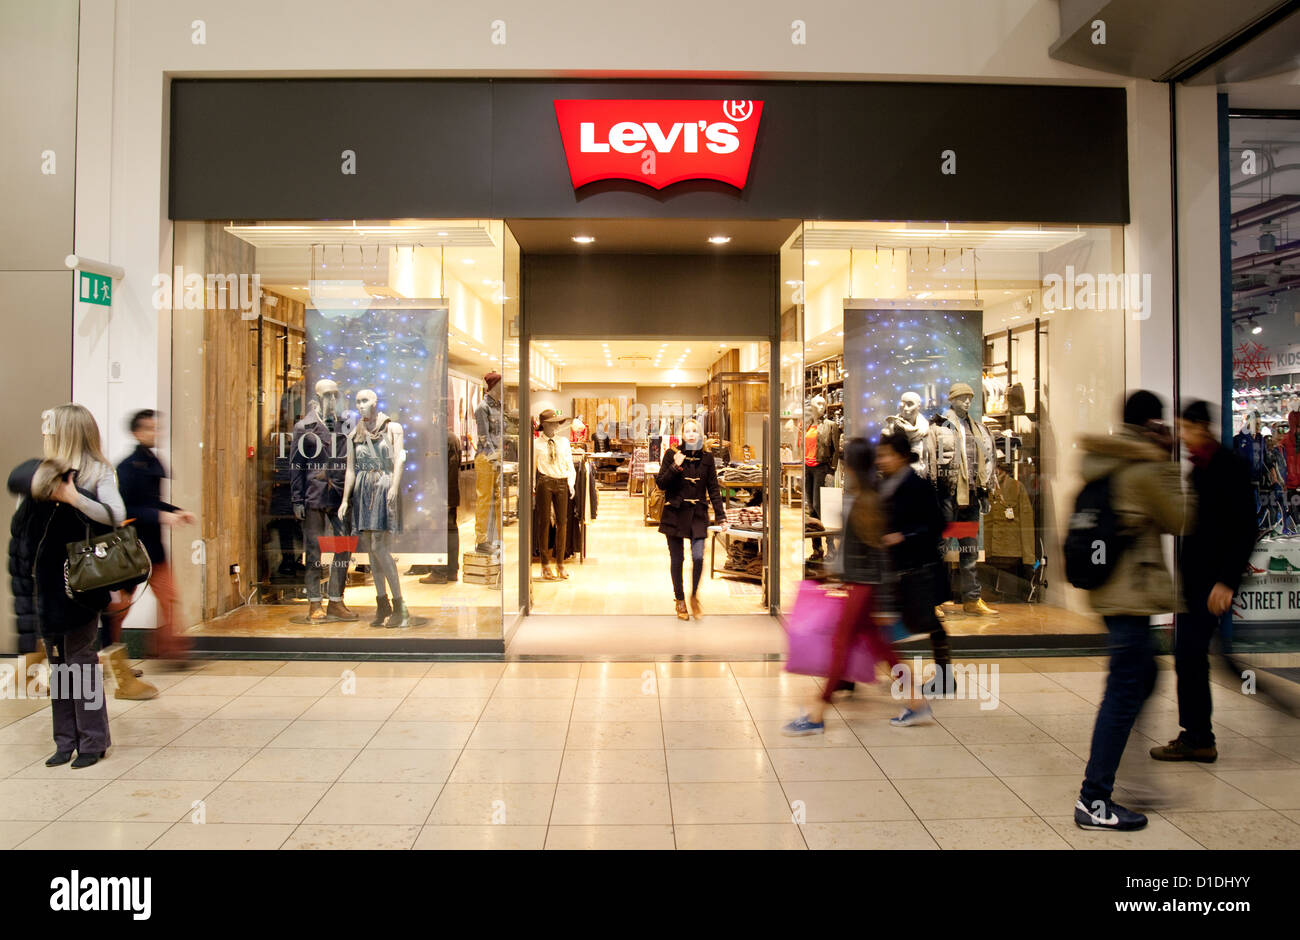 Die Levis Jeans Shop Shop, MK-Center, Milton Keynes, Buckinghamshire UK  Stockfotografie - Alamy